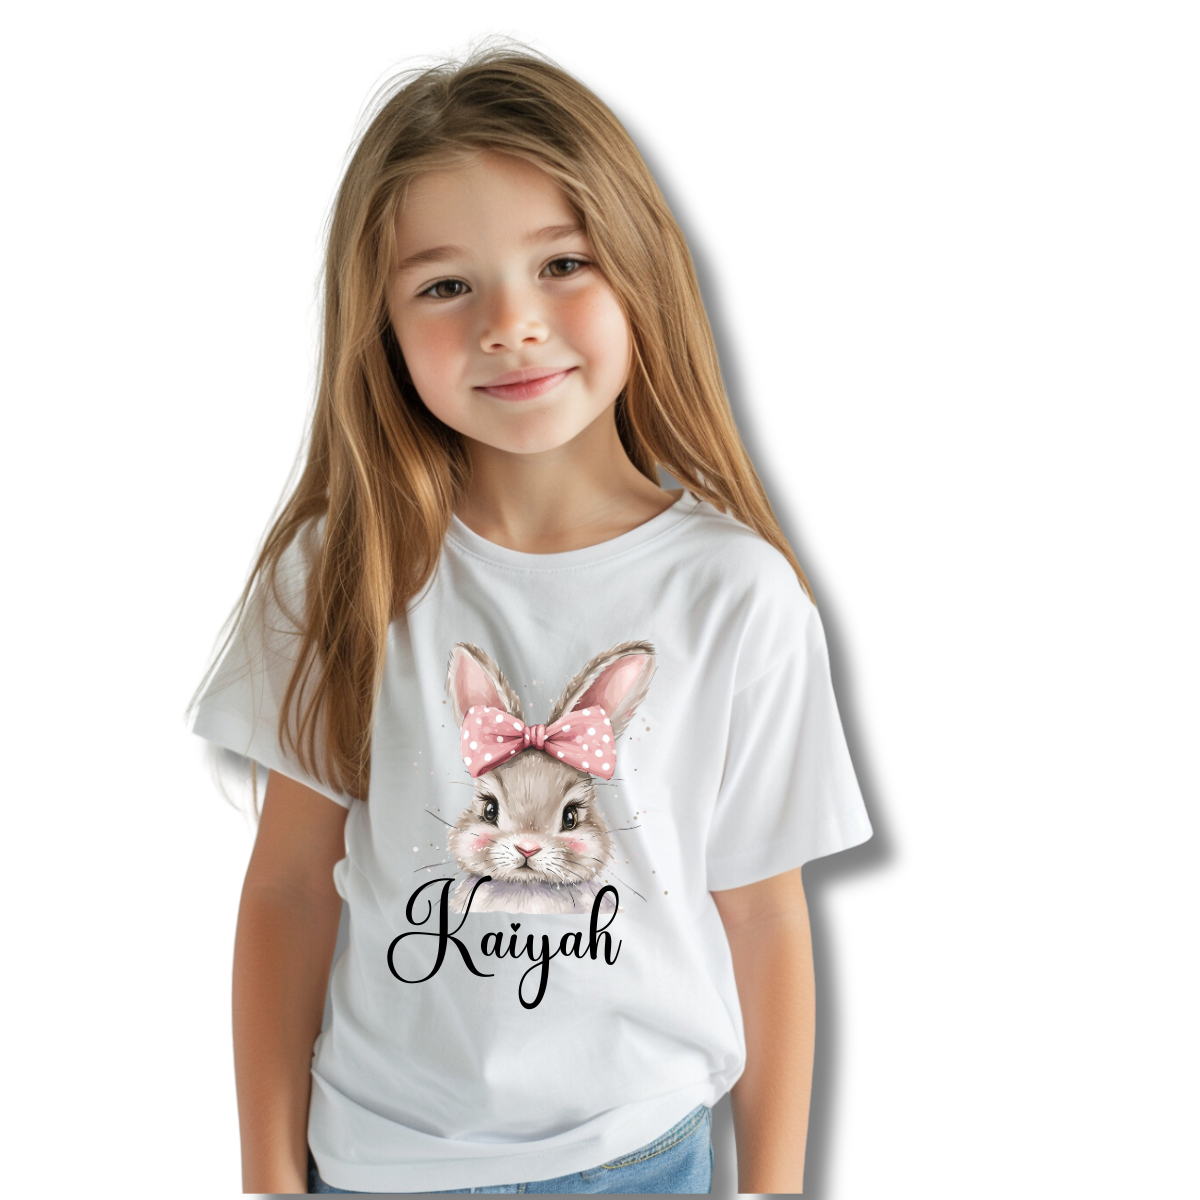 "Personalized Kids Bunny T-Shirt - Custom Name Soft Cotton Tee, Girls' Cute Rabbit Shirt with Polka Dot Bow, Customizable Children’s Fashion Top"